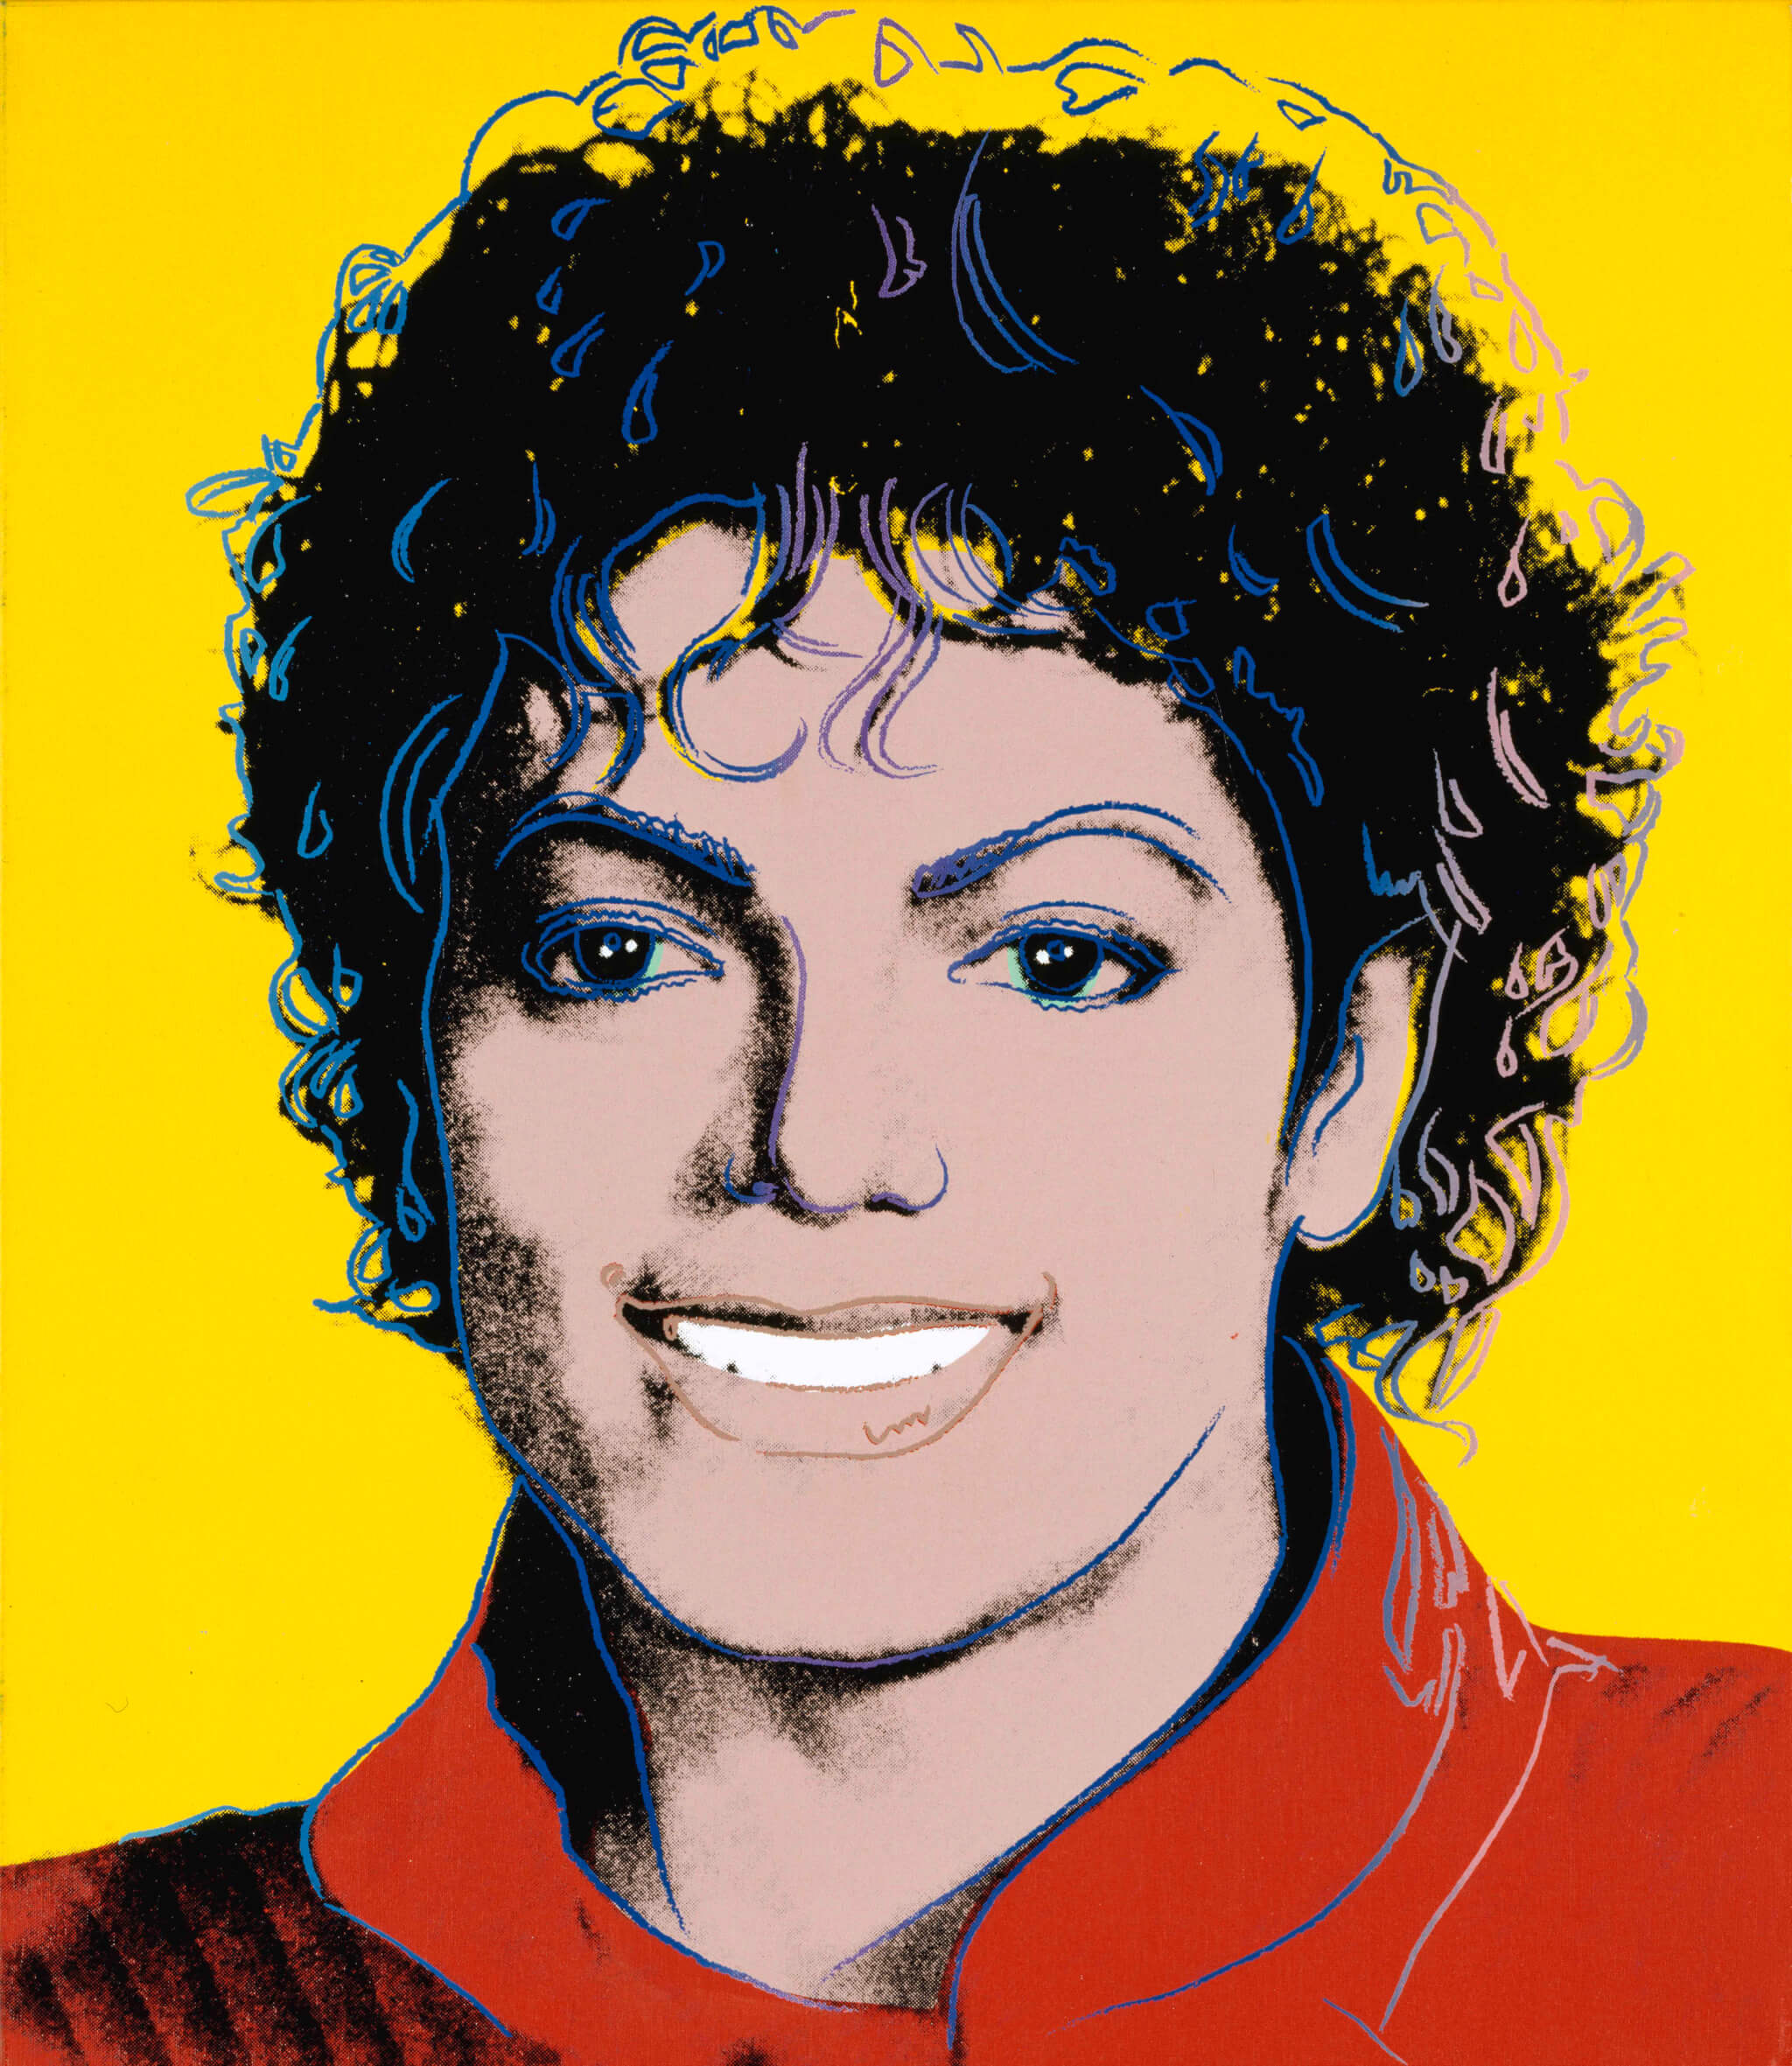 071 Michael Jackson by Warhol NPG 86 TC14 Jackson R resized